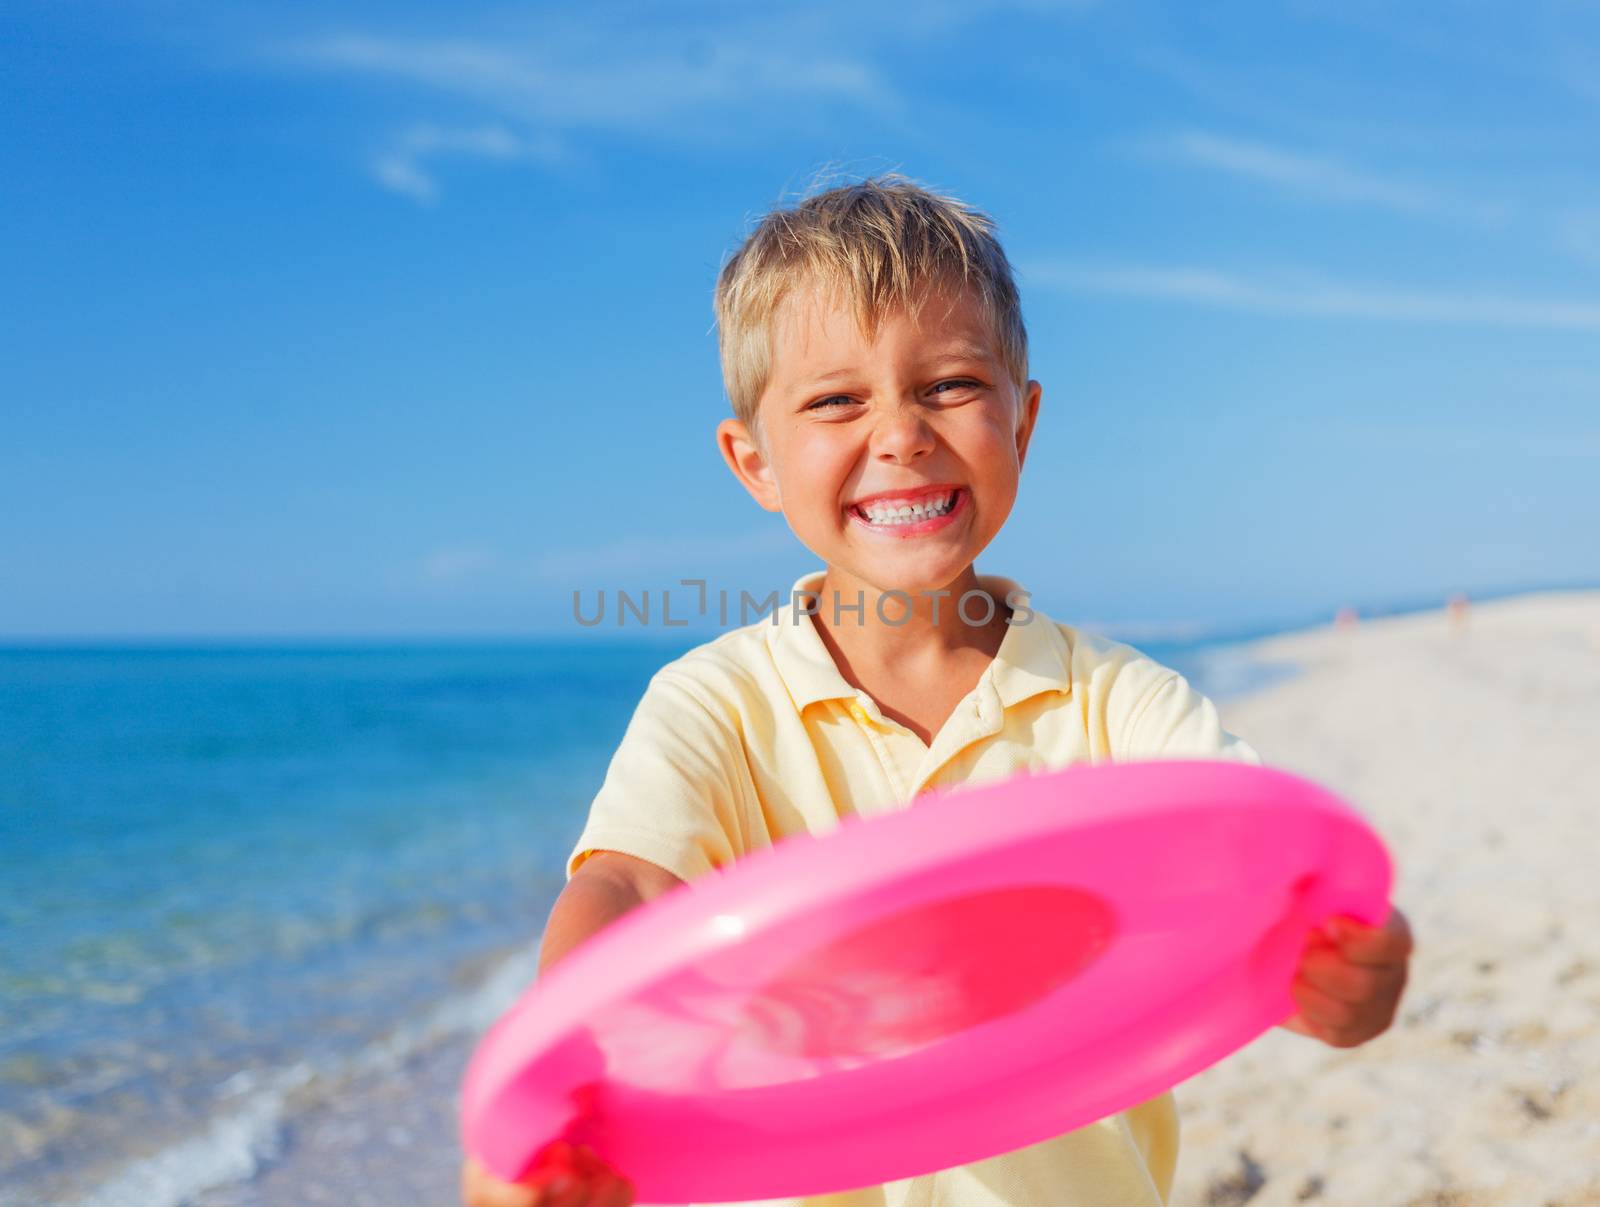 Cute little boy playing frisbee on beach